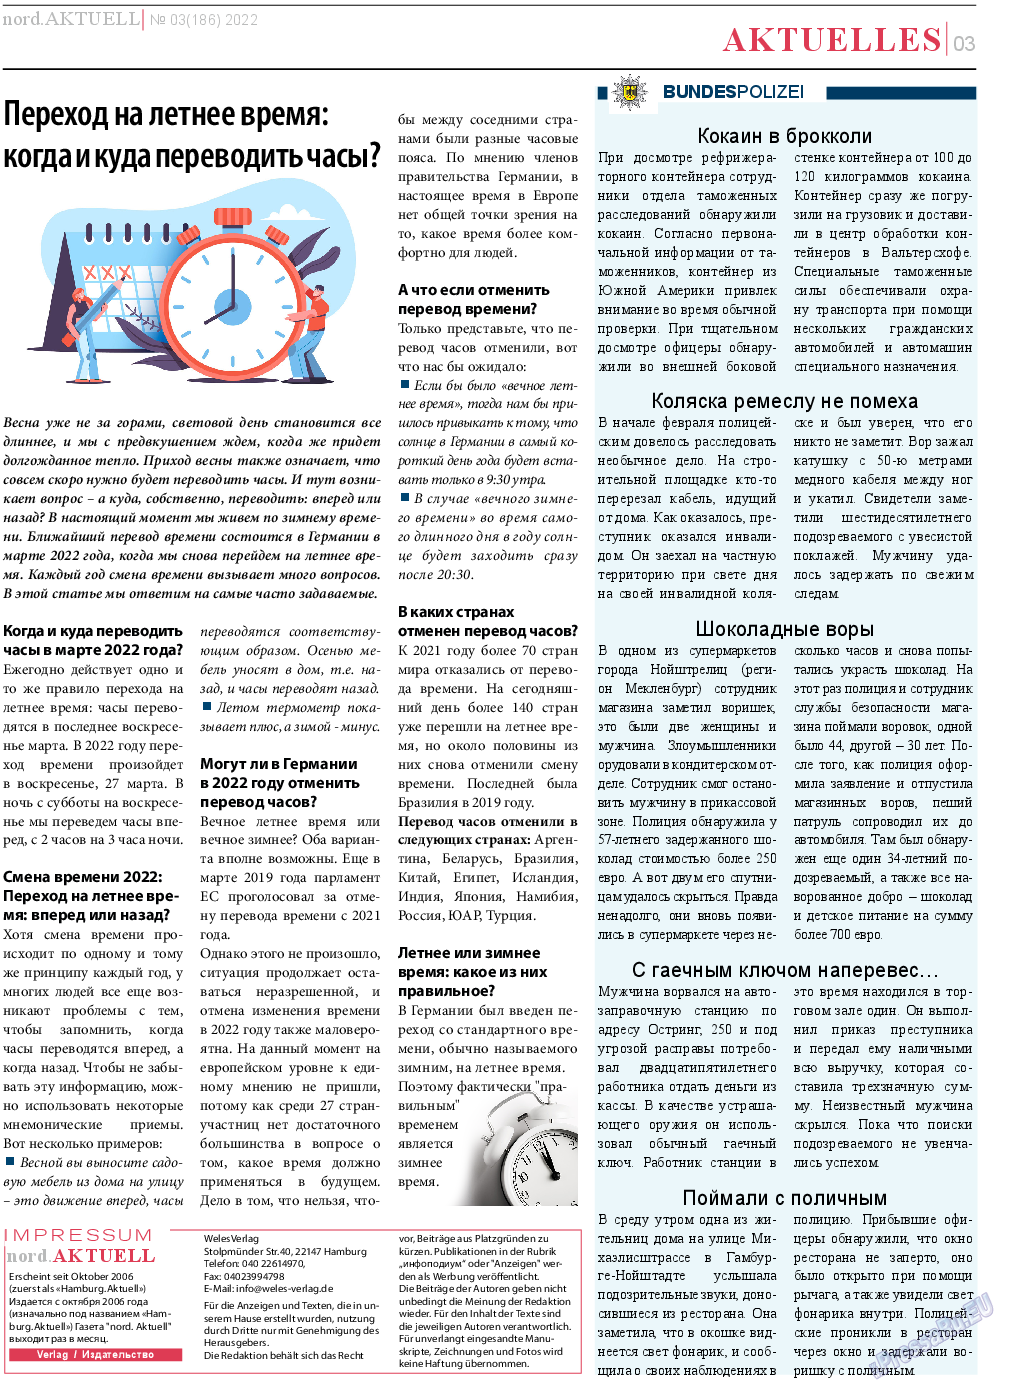 nord.Aktuell, газета. 2022 №3 стр.3